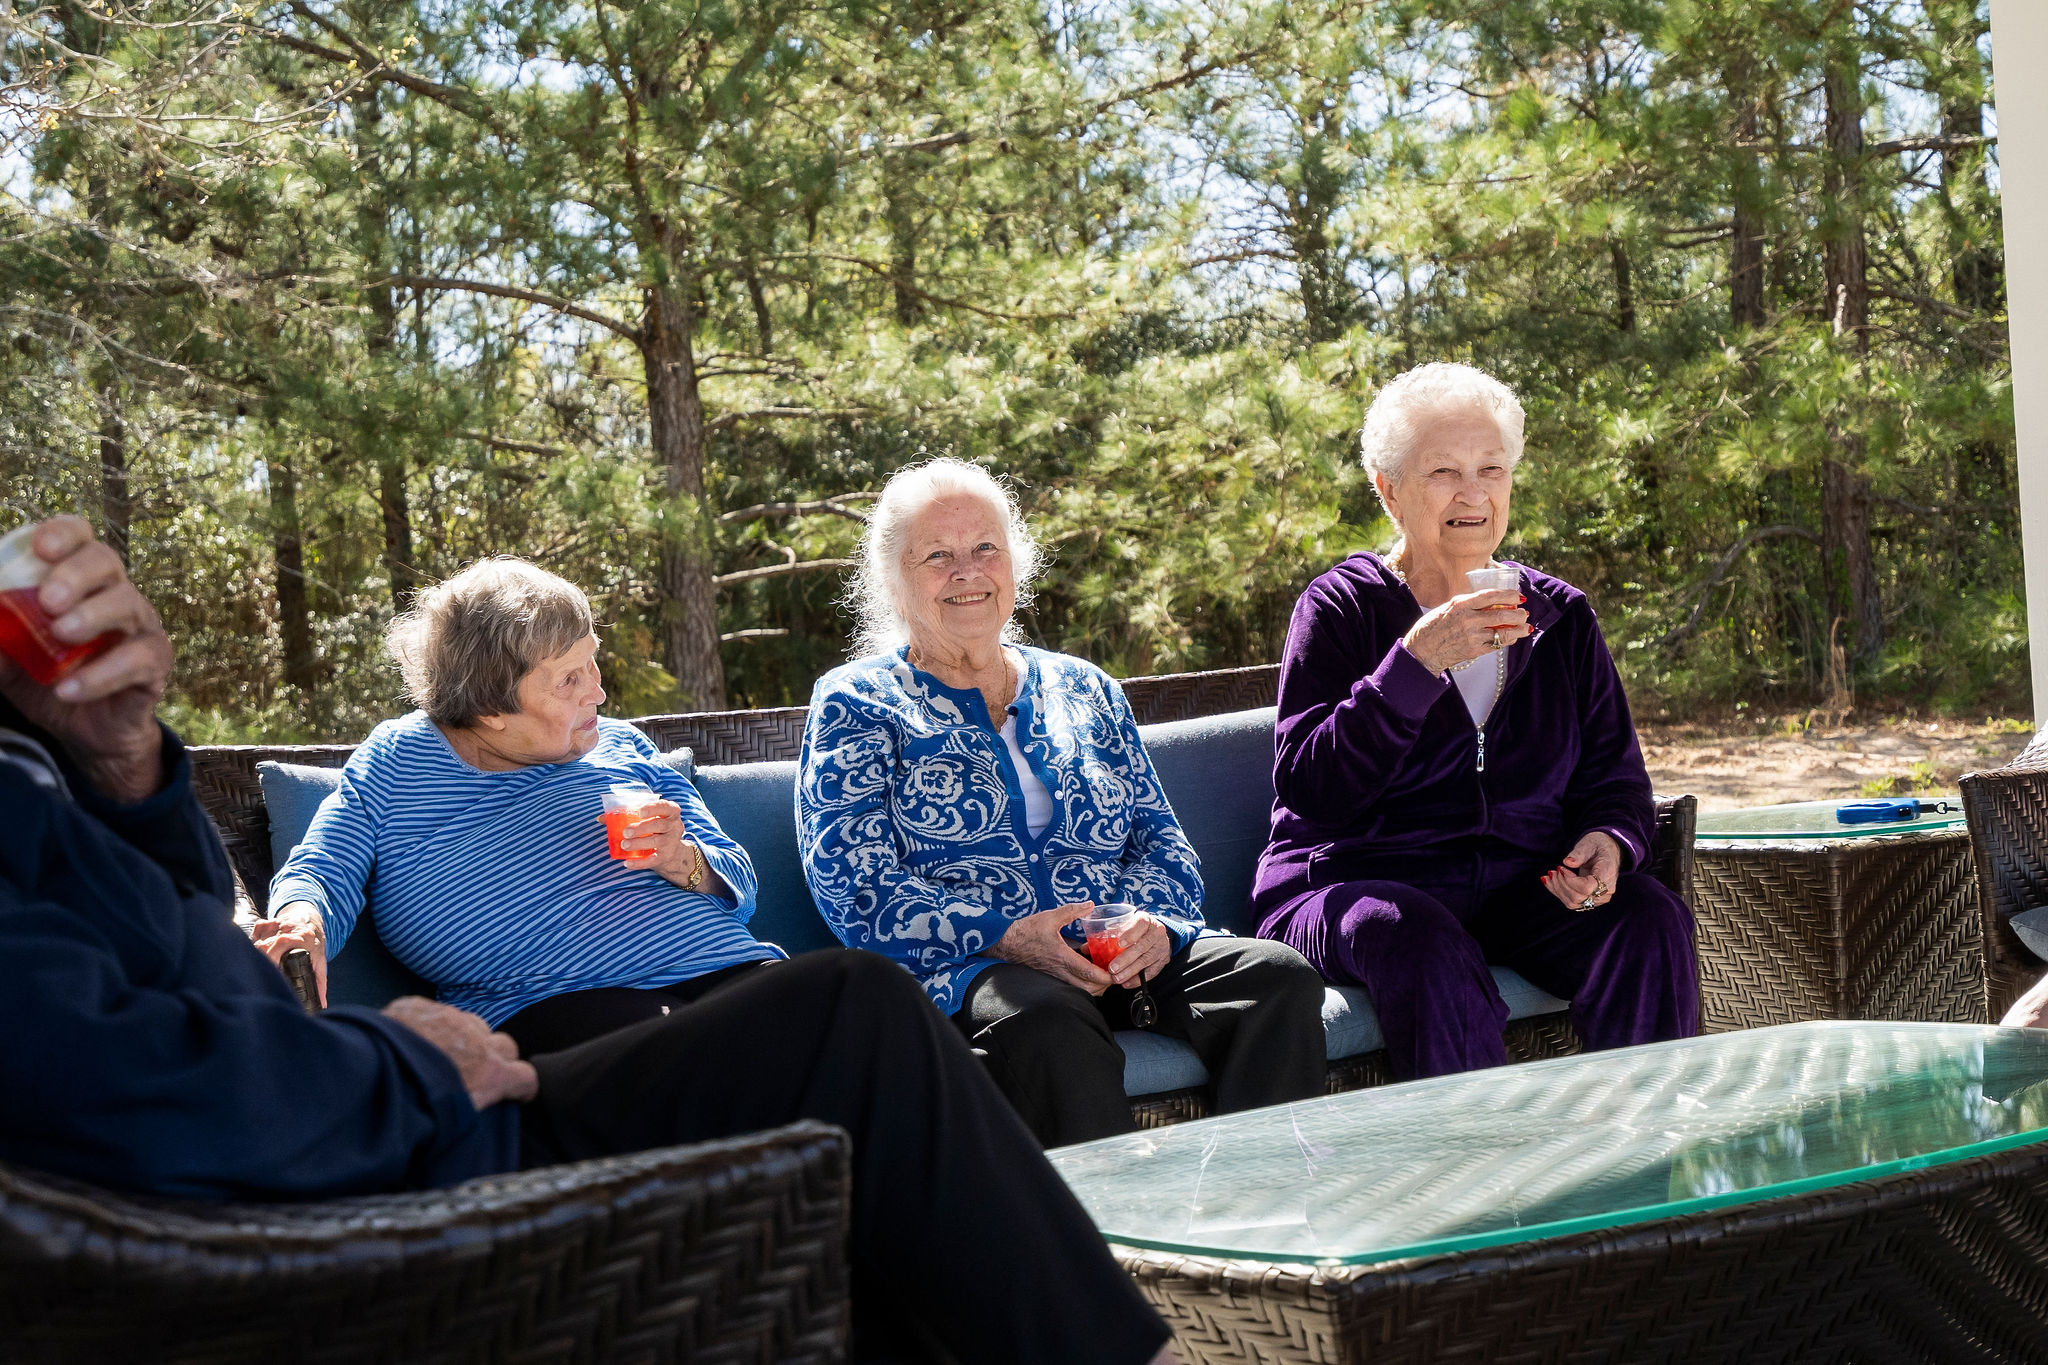 Three assisted living residents enjoying lemonade